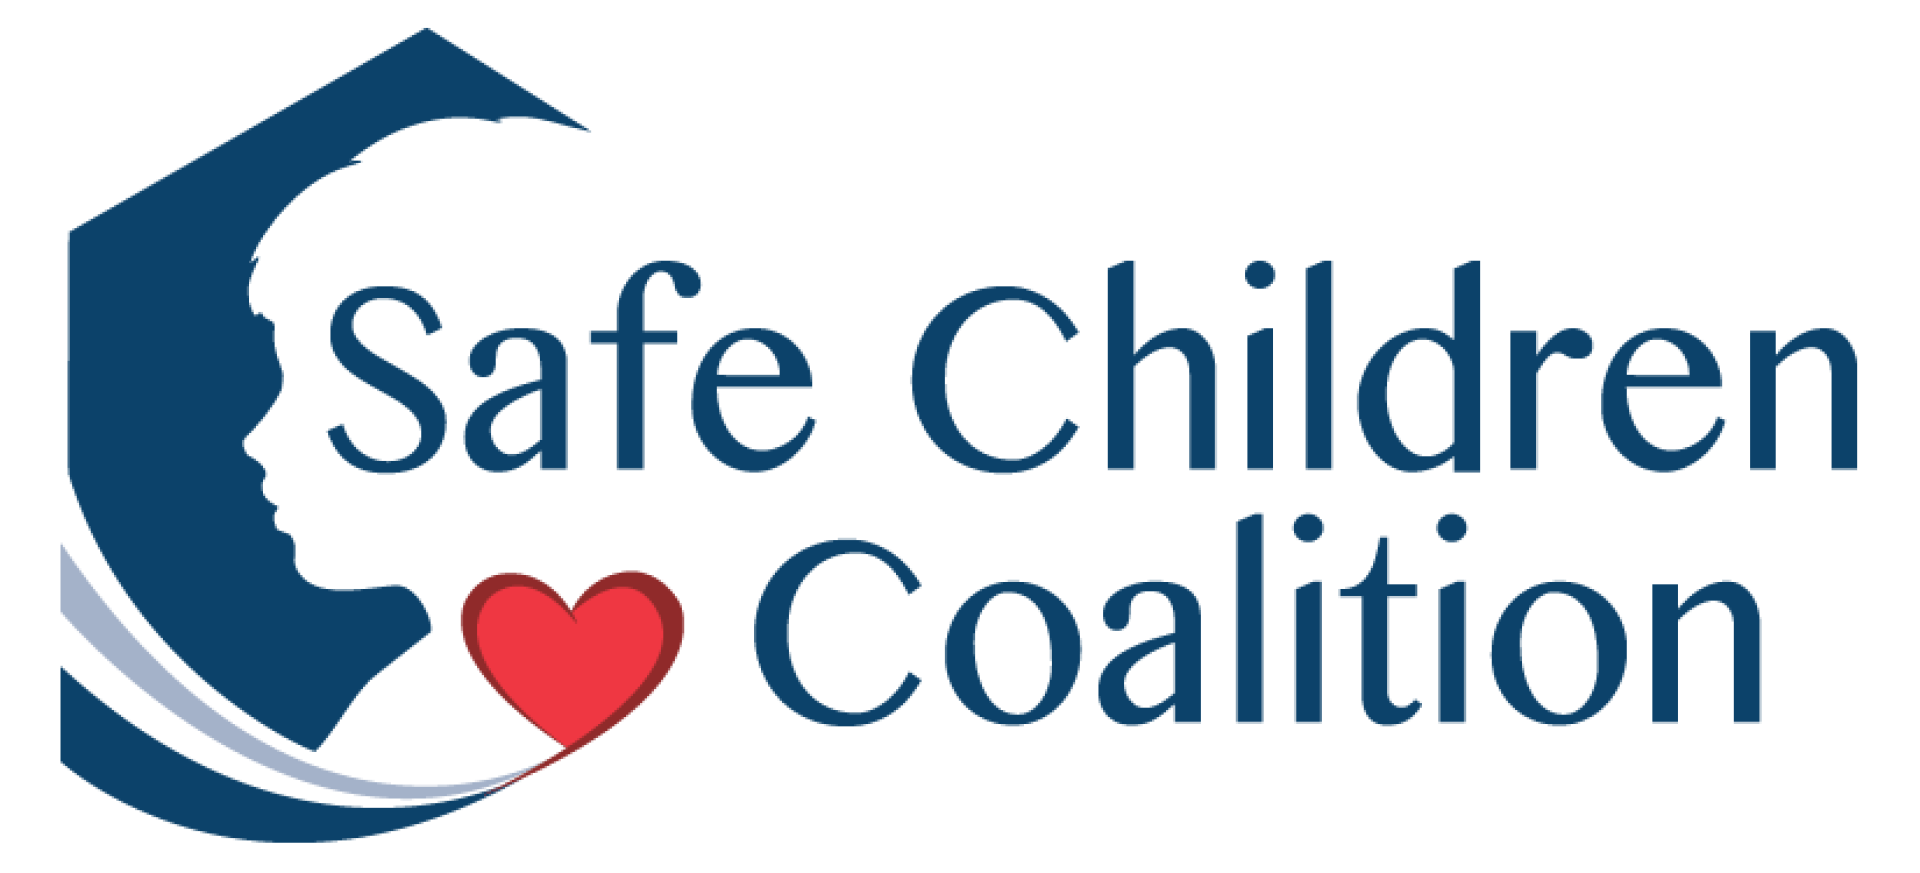 Safe Children Coalition